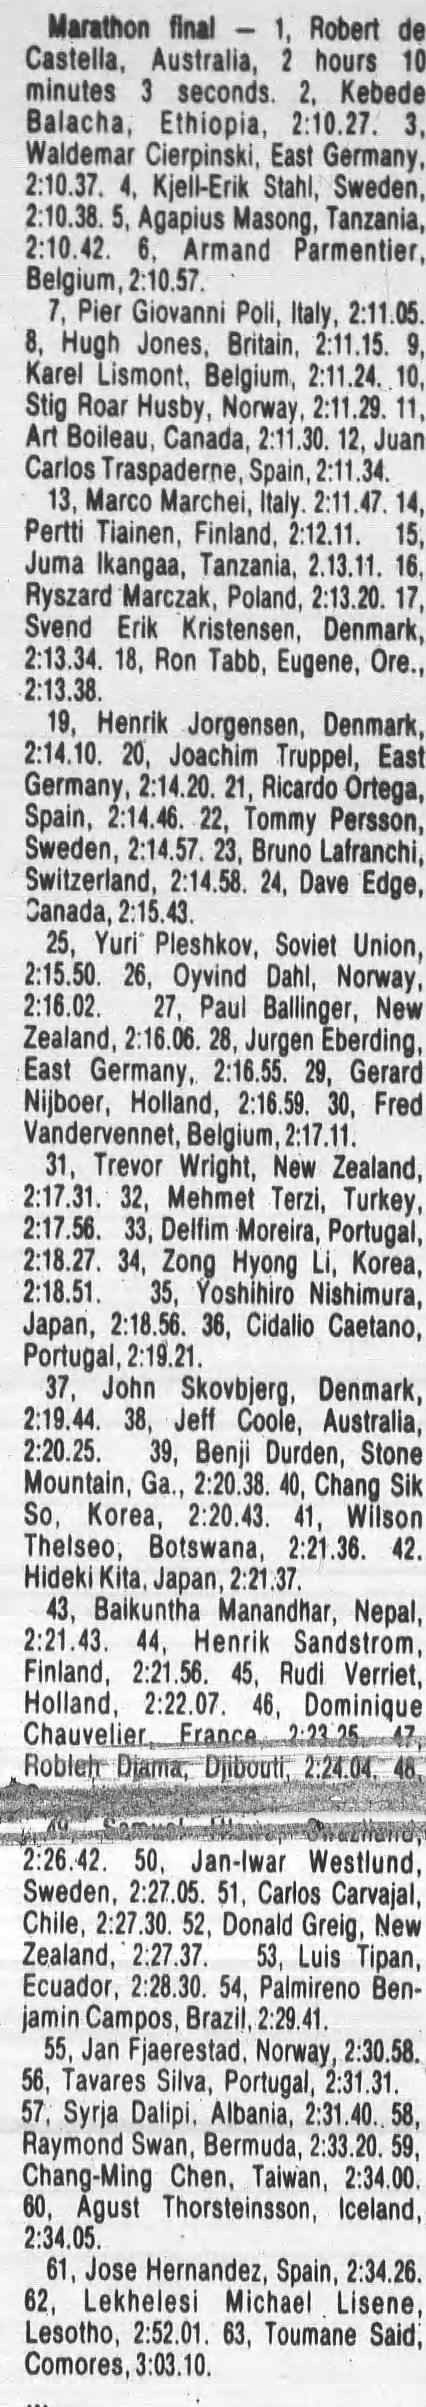 1983 Marathon Championships men